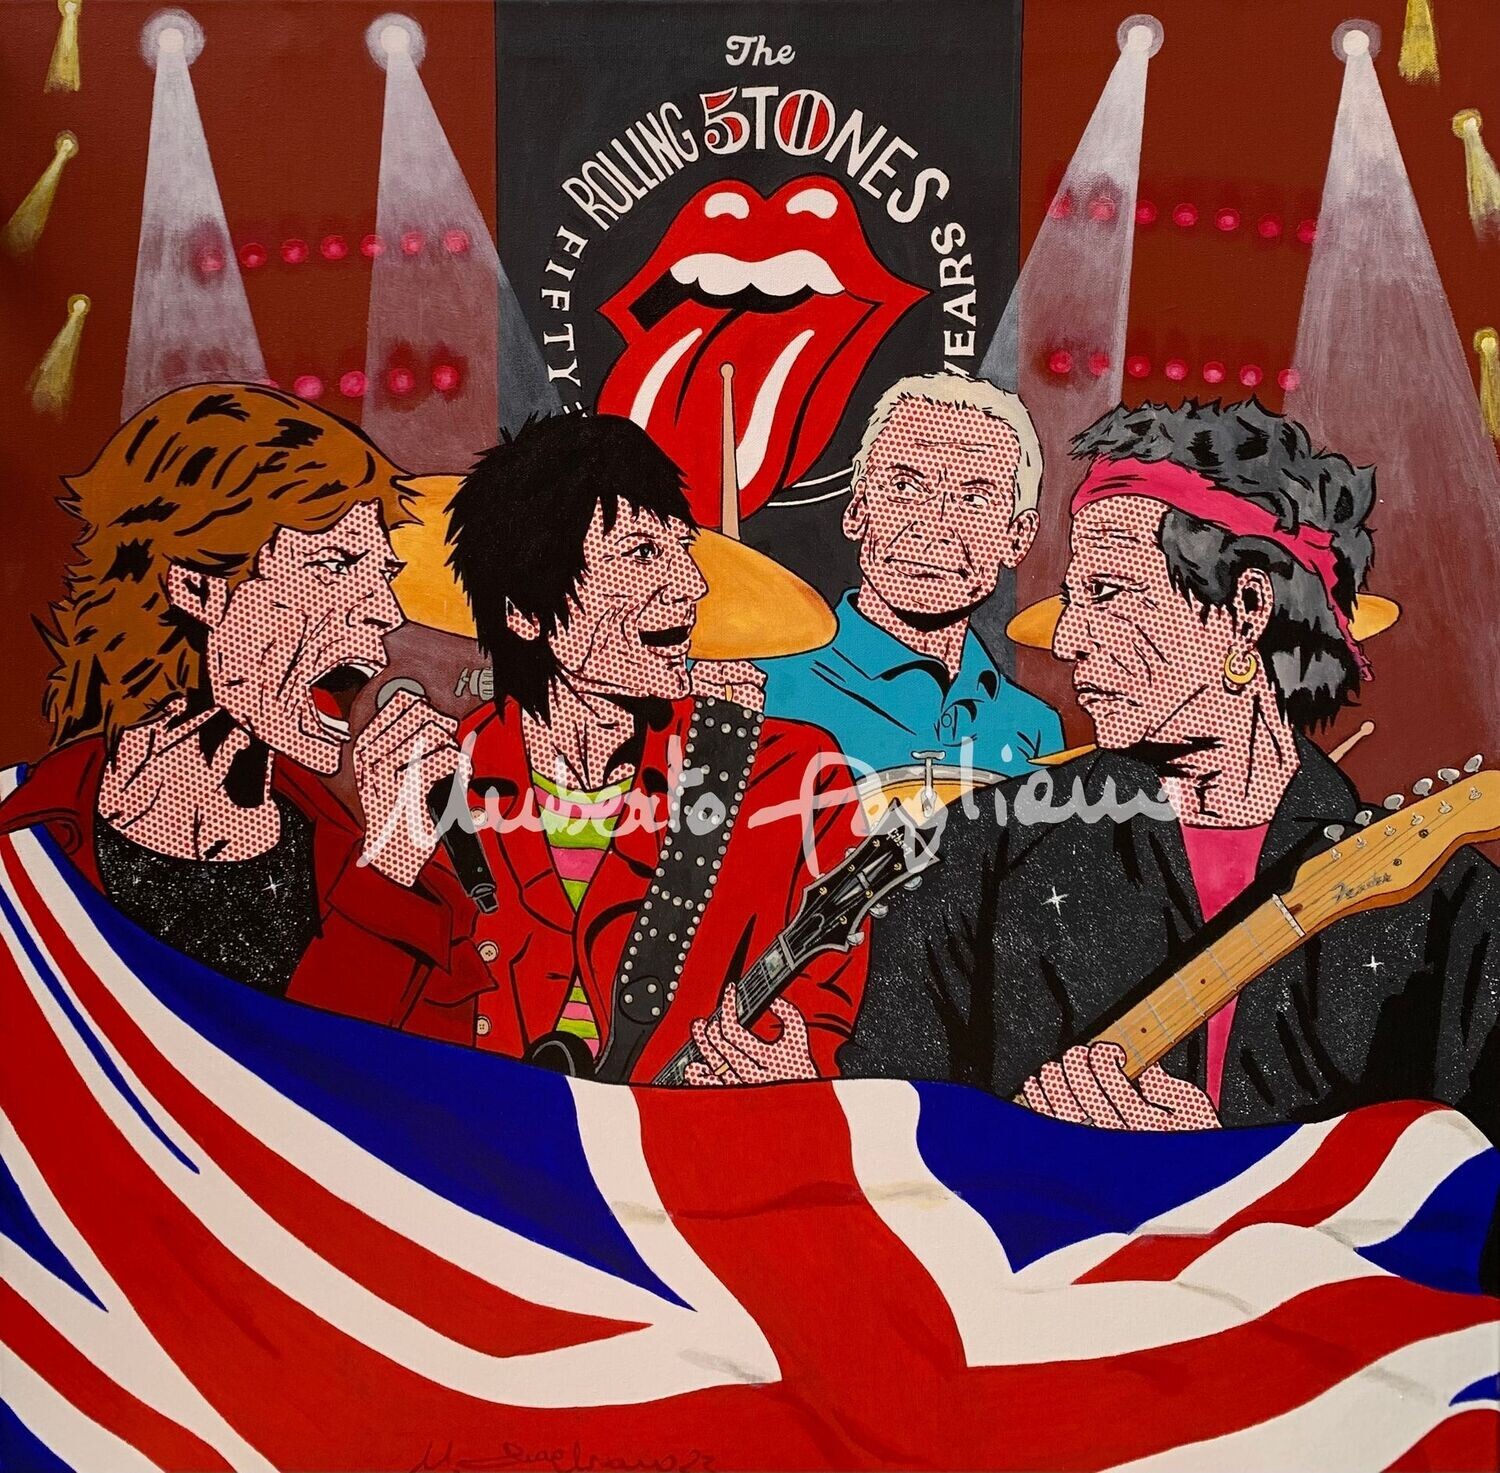 Rolling Stones' 50th Anniversary